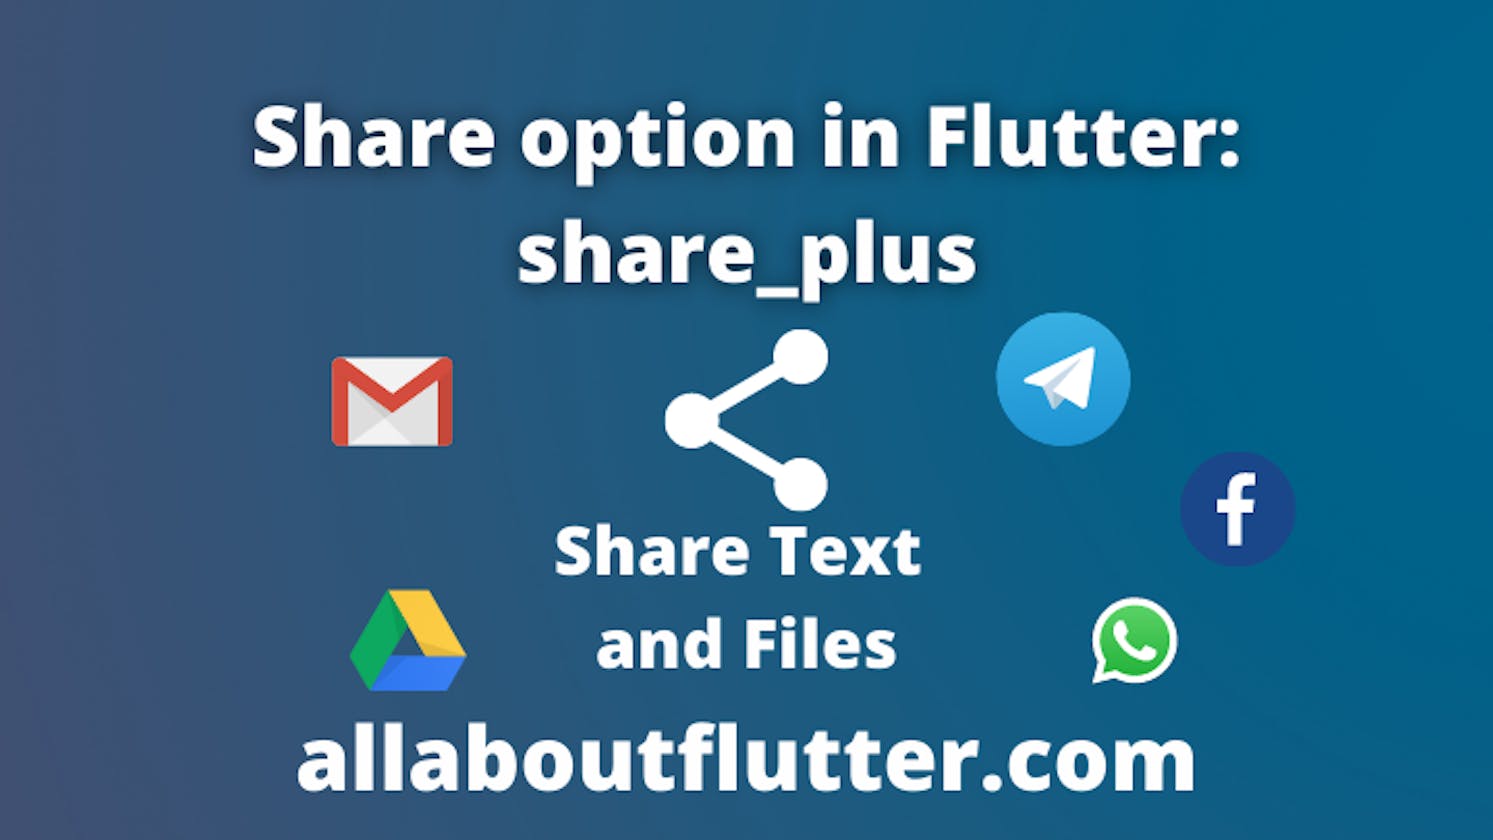 Share option in Flutter: share_plus